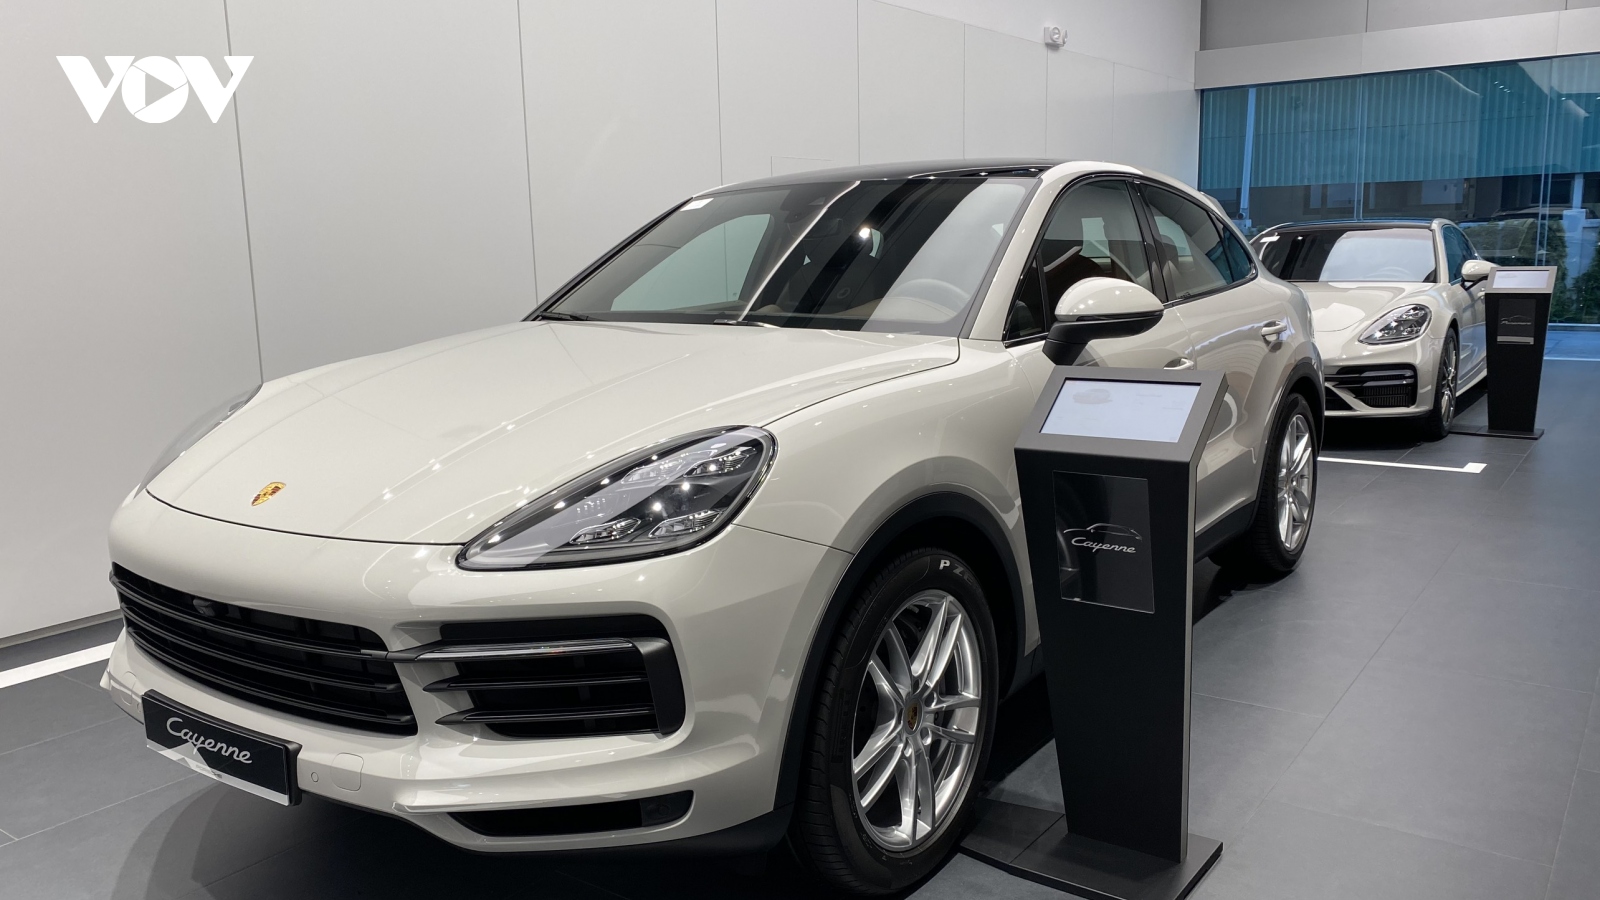 Quý 1/2022, doanh số Porsche giảm 5% so với năm 2021